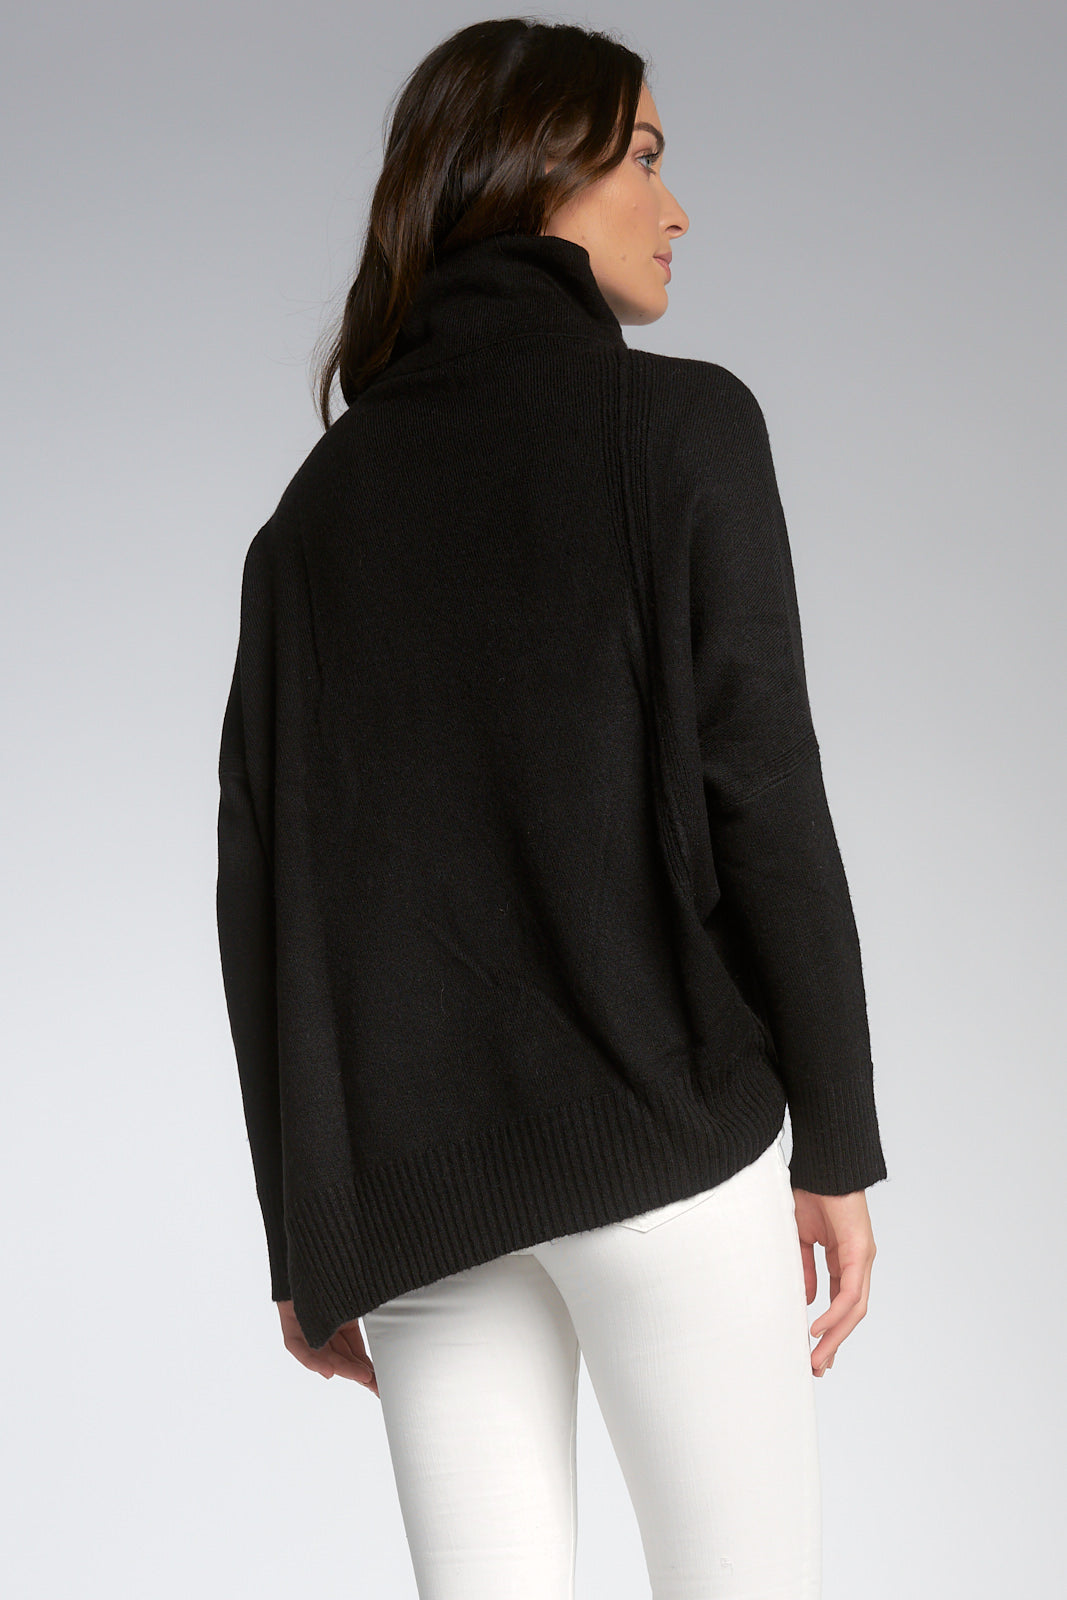 Black Asymmetrical L/S Turtleneck Sweater